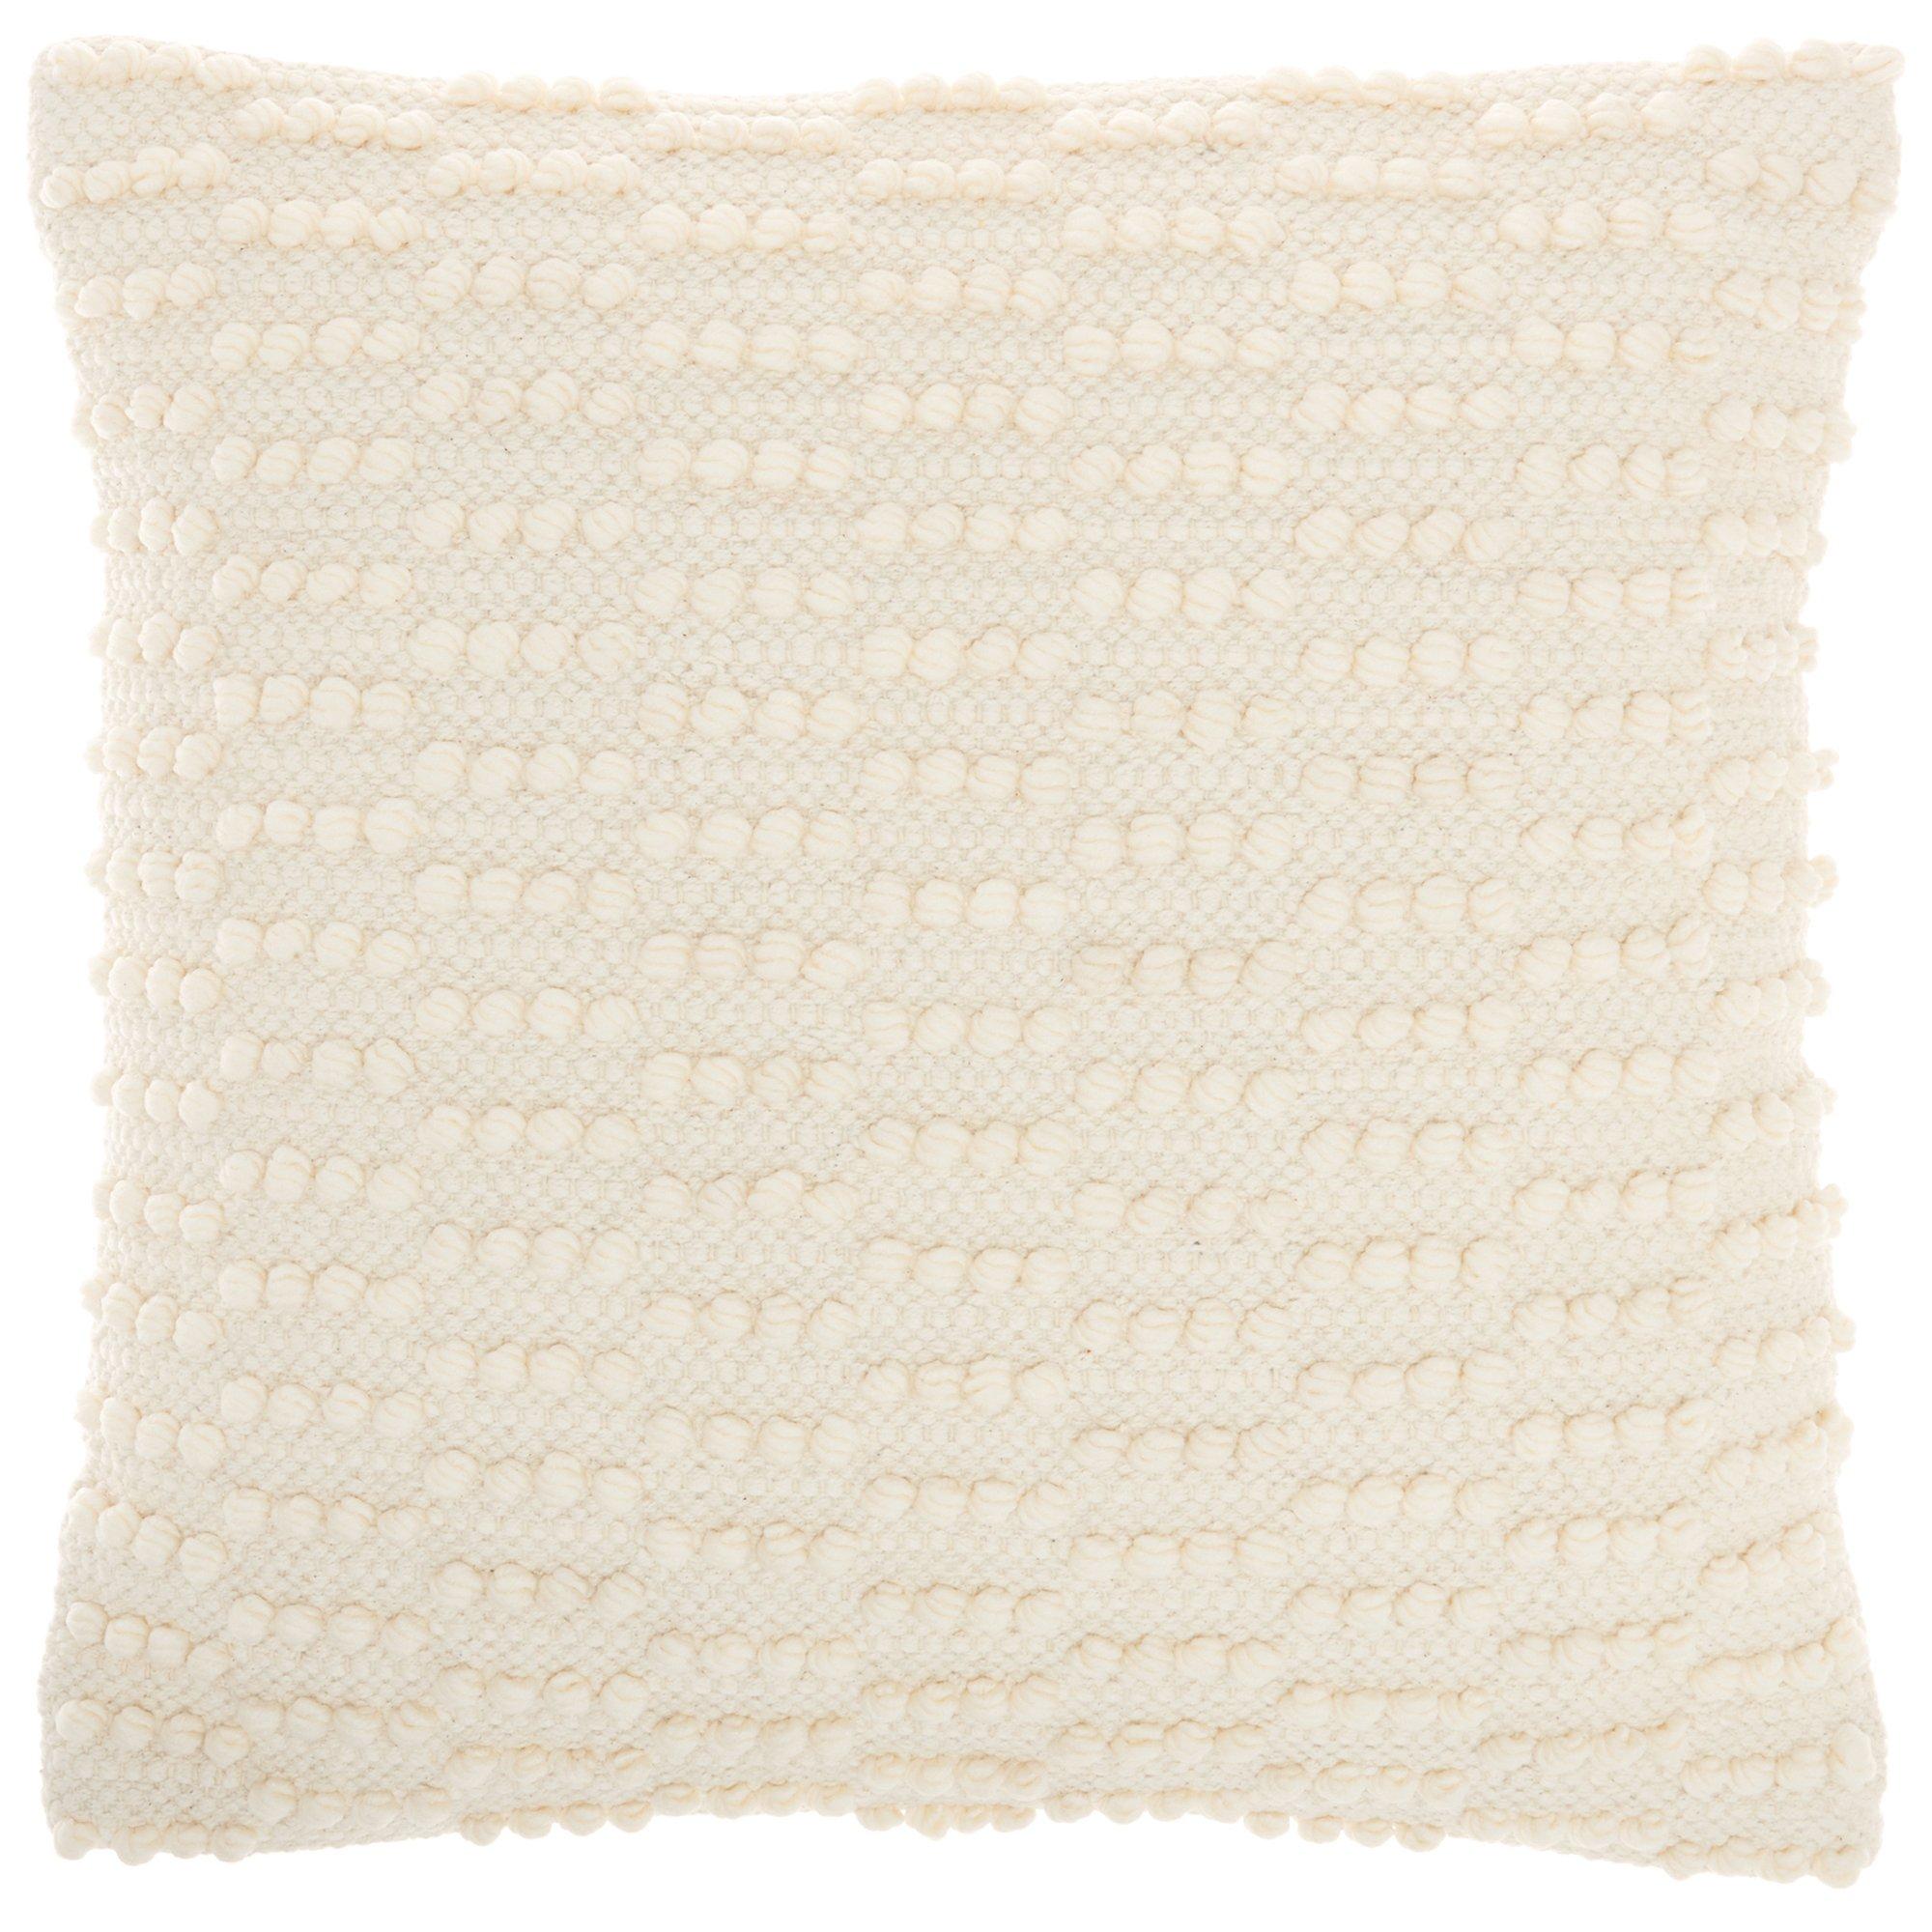 18x18 Woven Dot Decorative Pillow